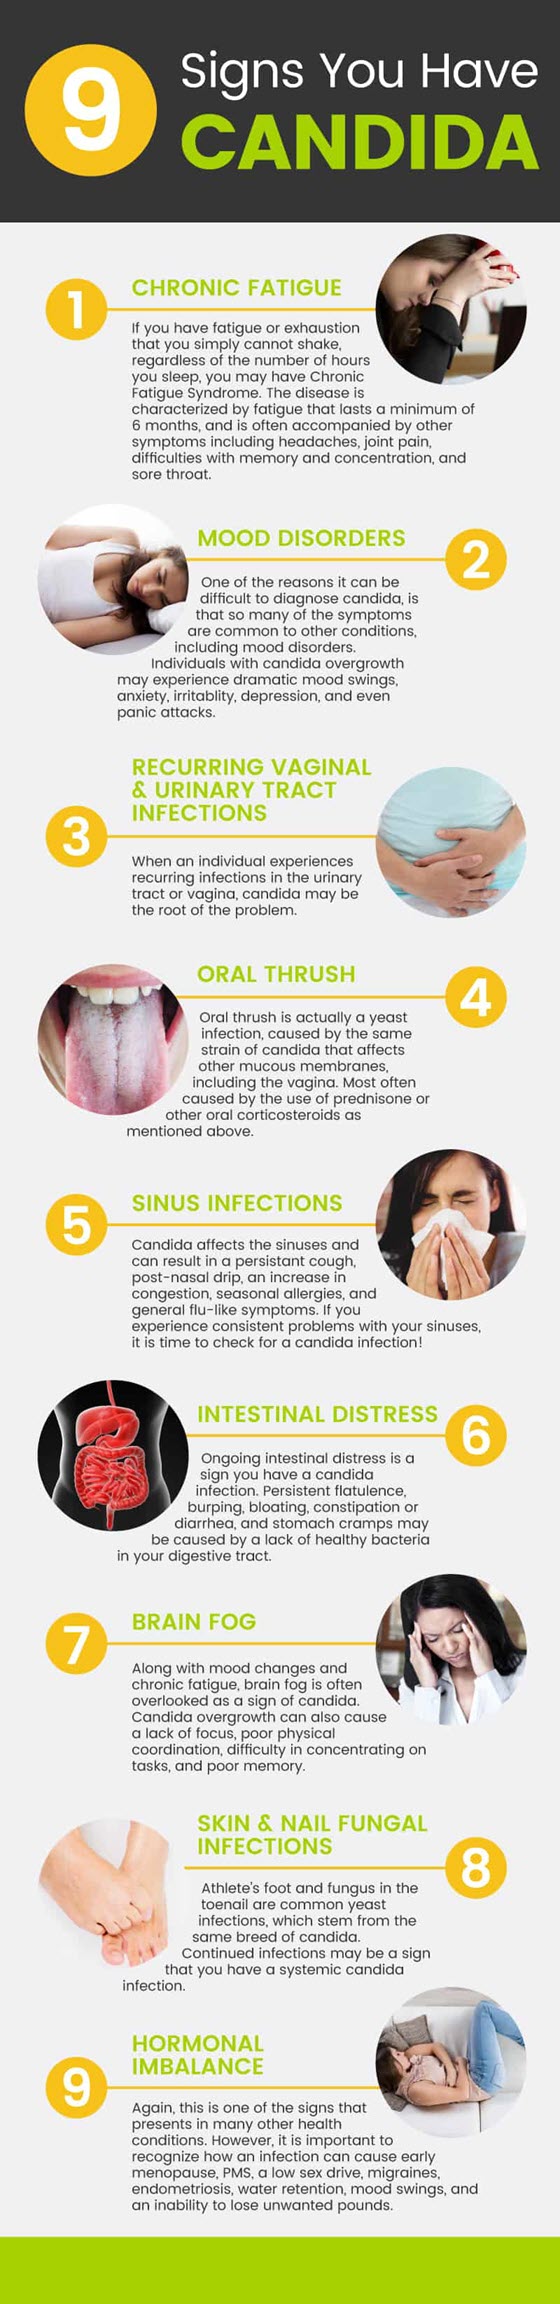 Candida symptoms: 9 signs